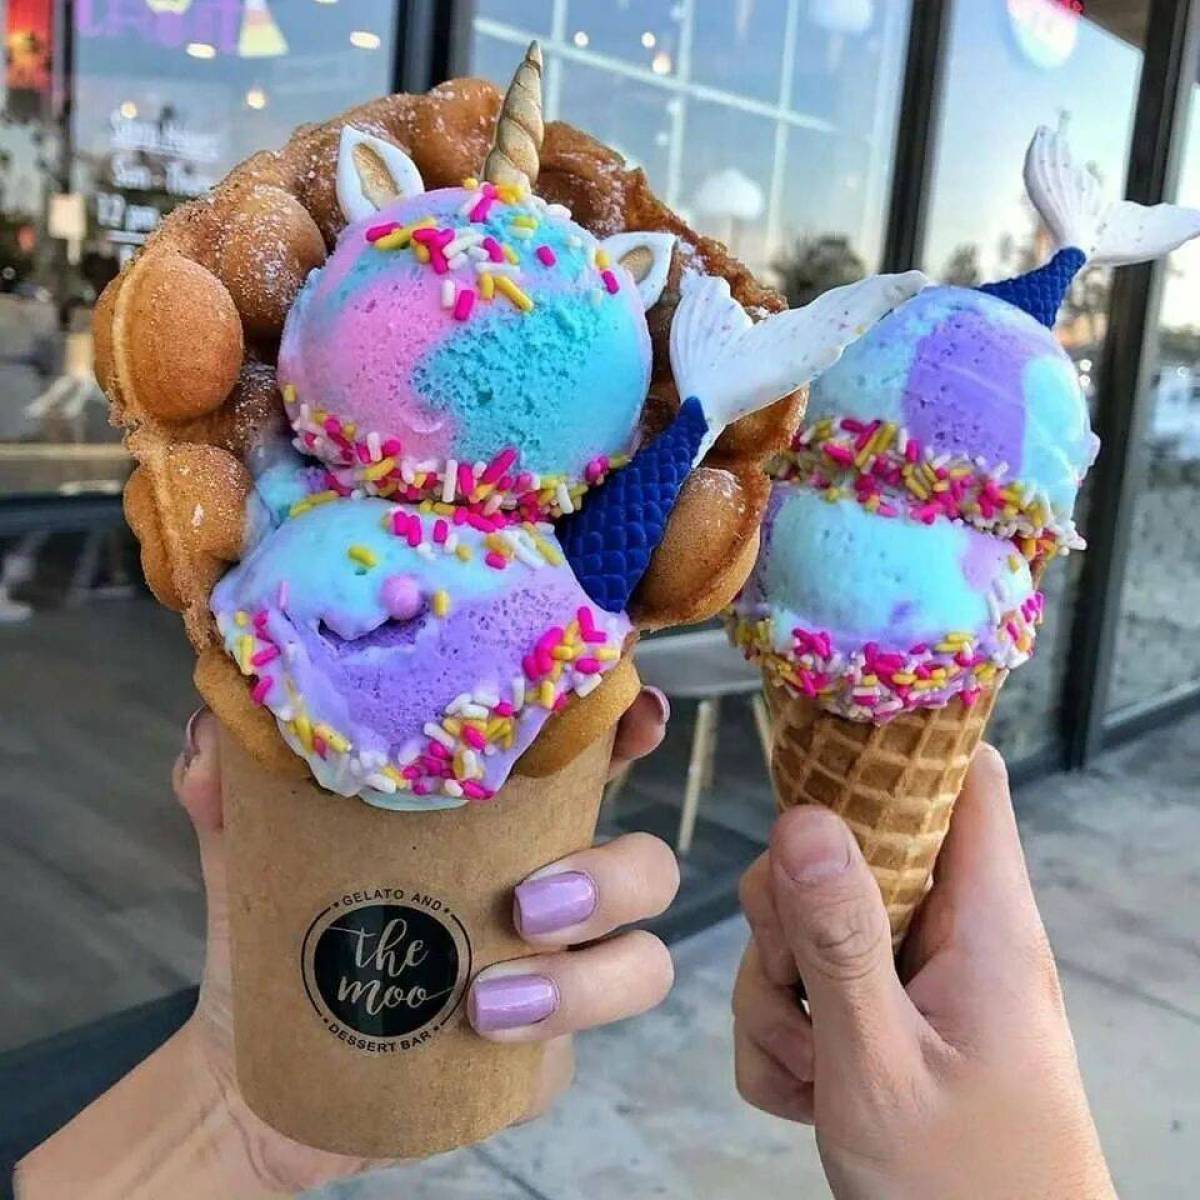 Где мороженка. Необычное мороженое. Красивое мороженое. Самое красивое мороженое. Необычные формы мороженого.